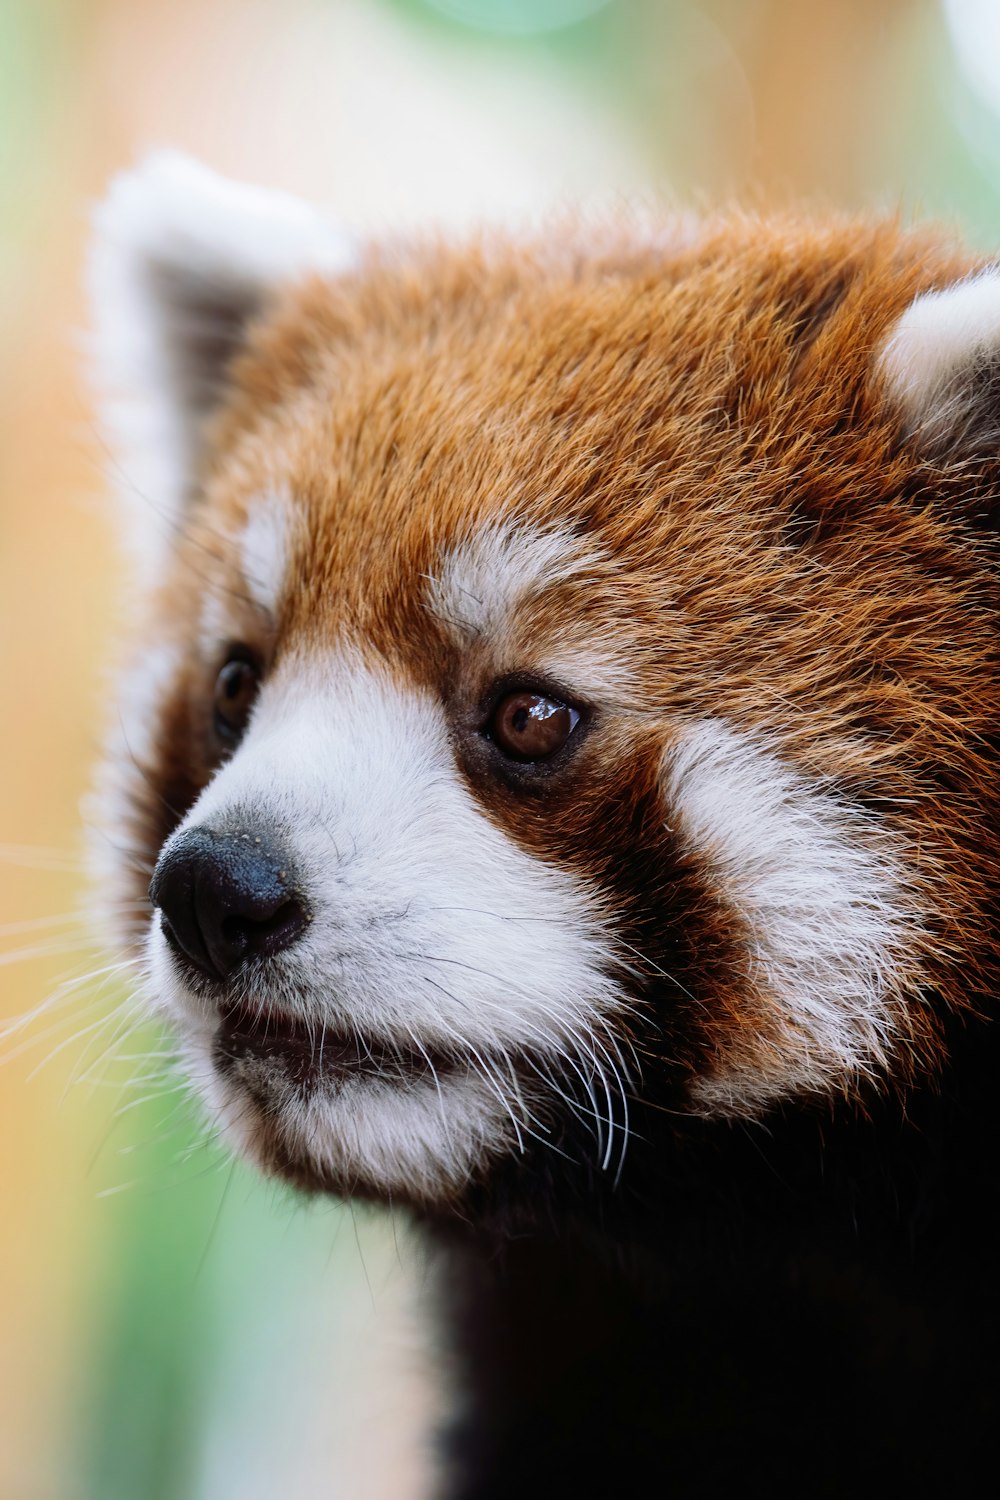 a close up of a red panda bear's face